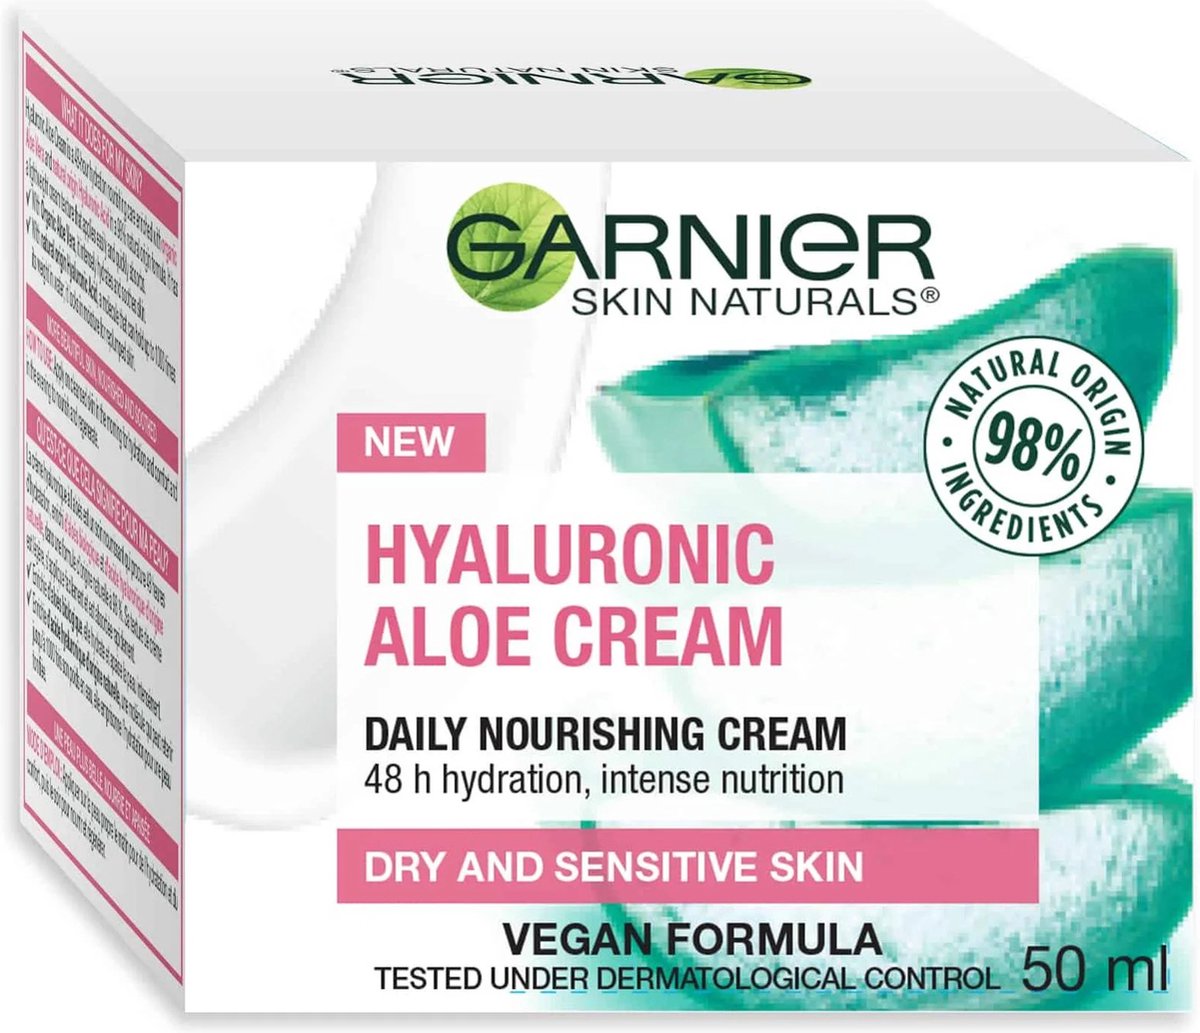 Garnier Hyaluronic Aloe Cream dry sensitive skin vegan 50 ml